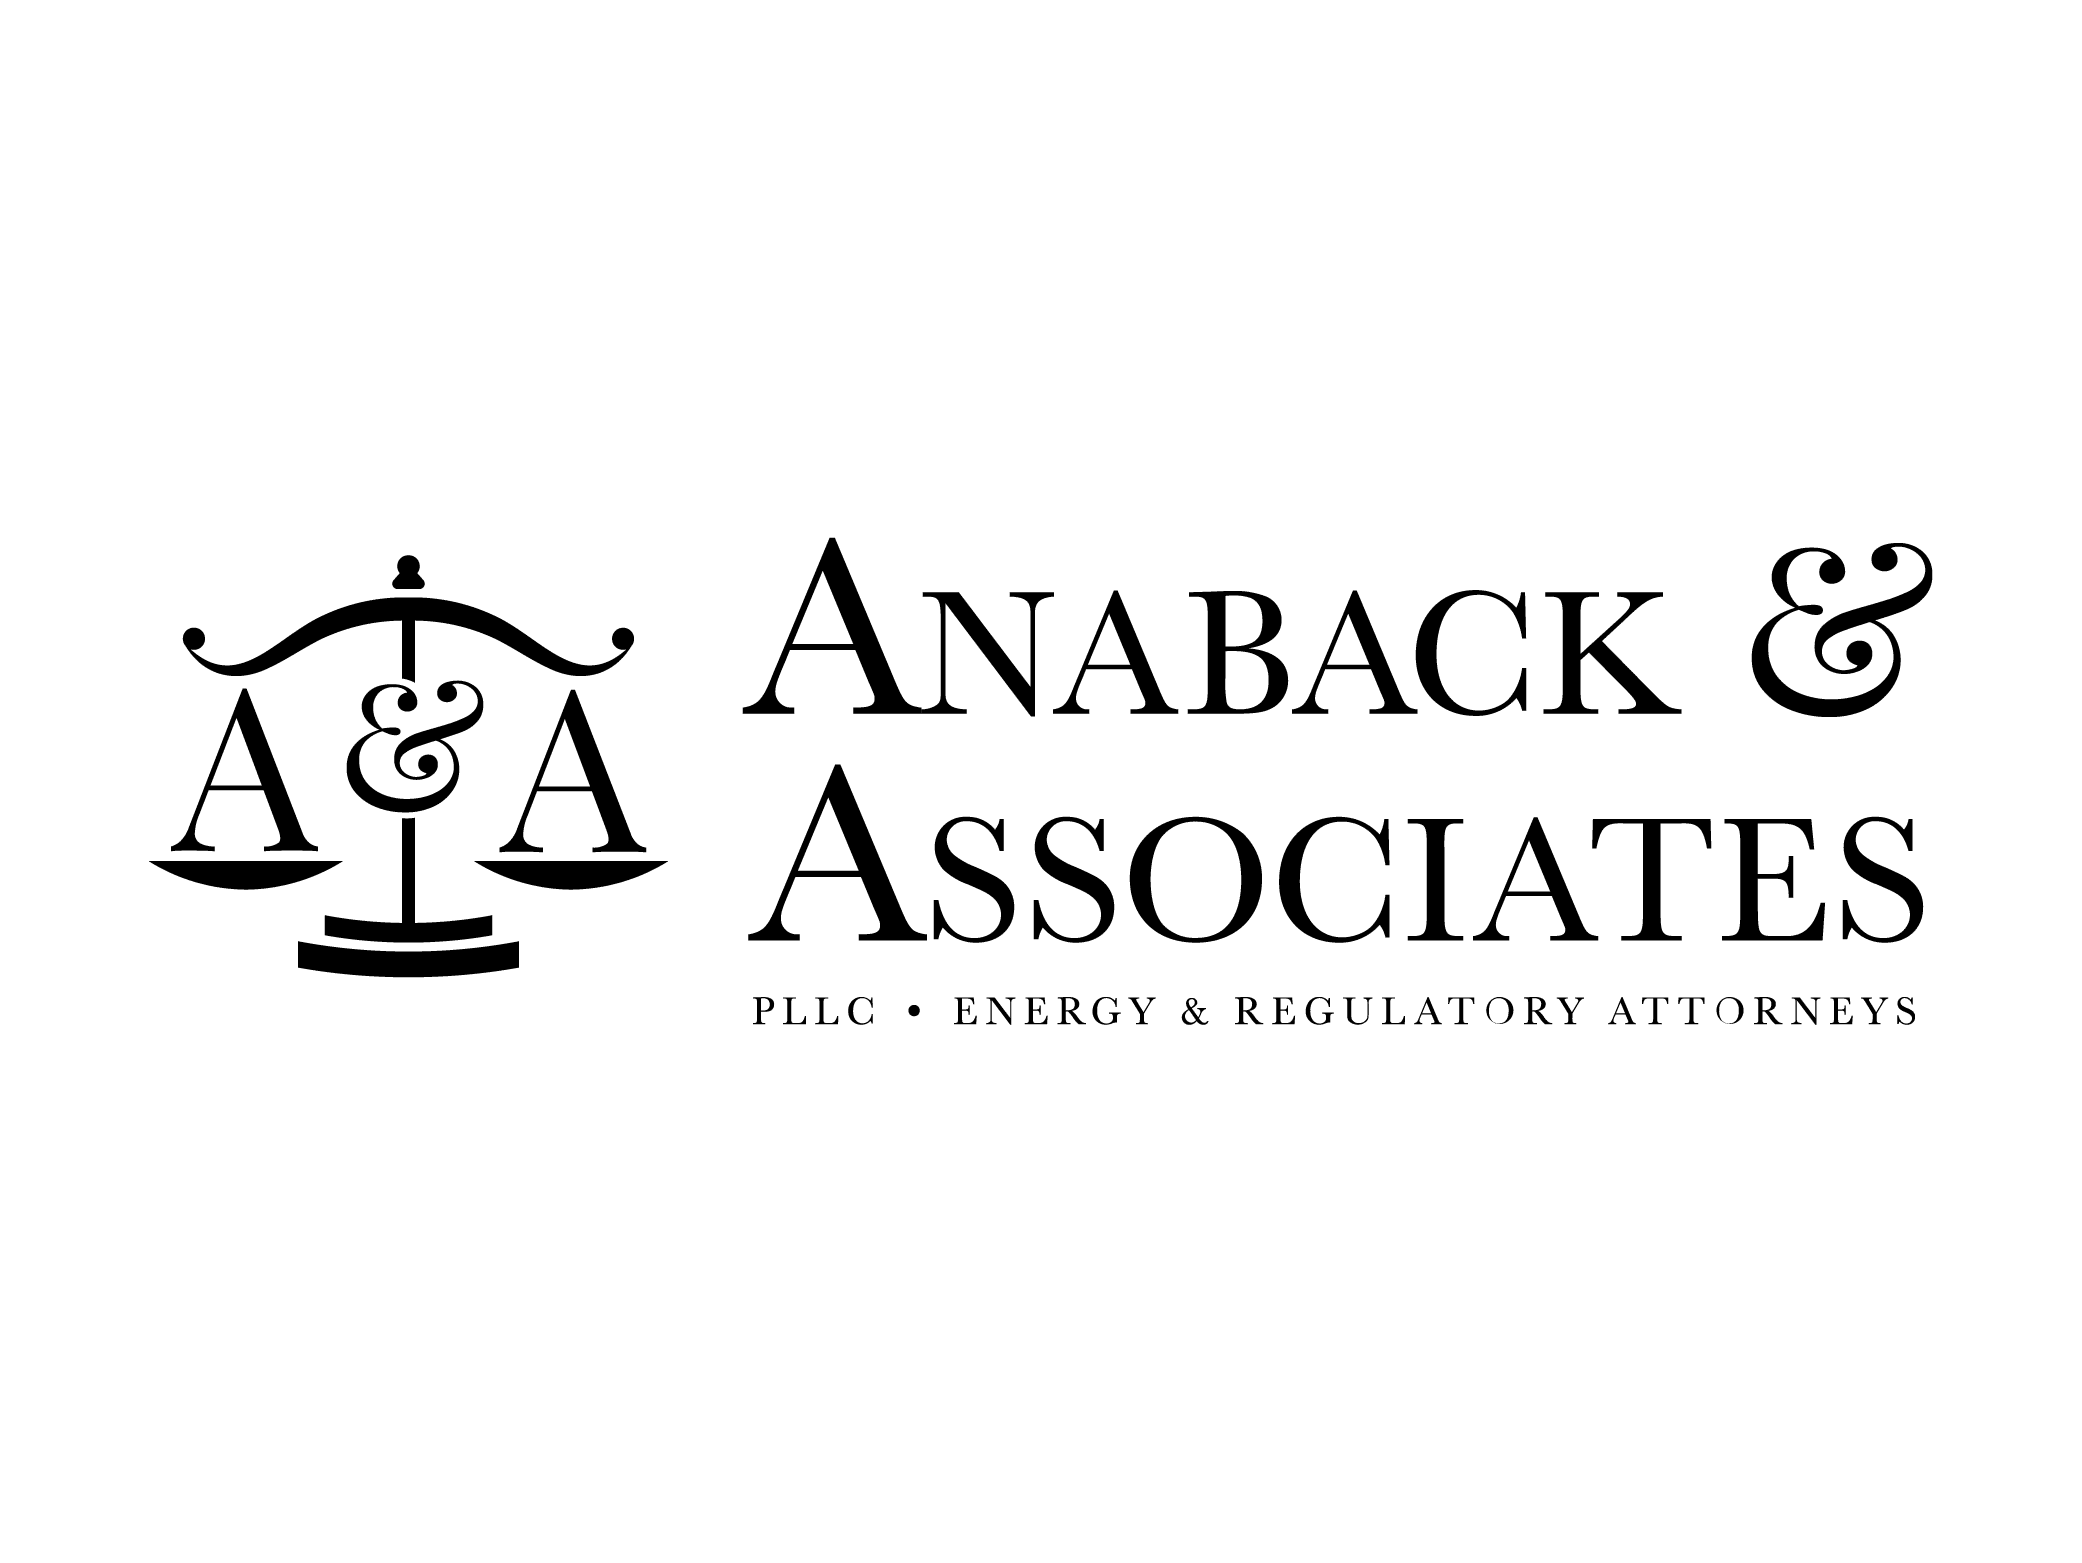 Anaback & Associates Logo